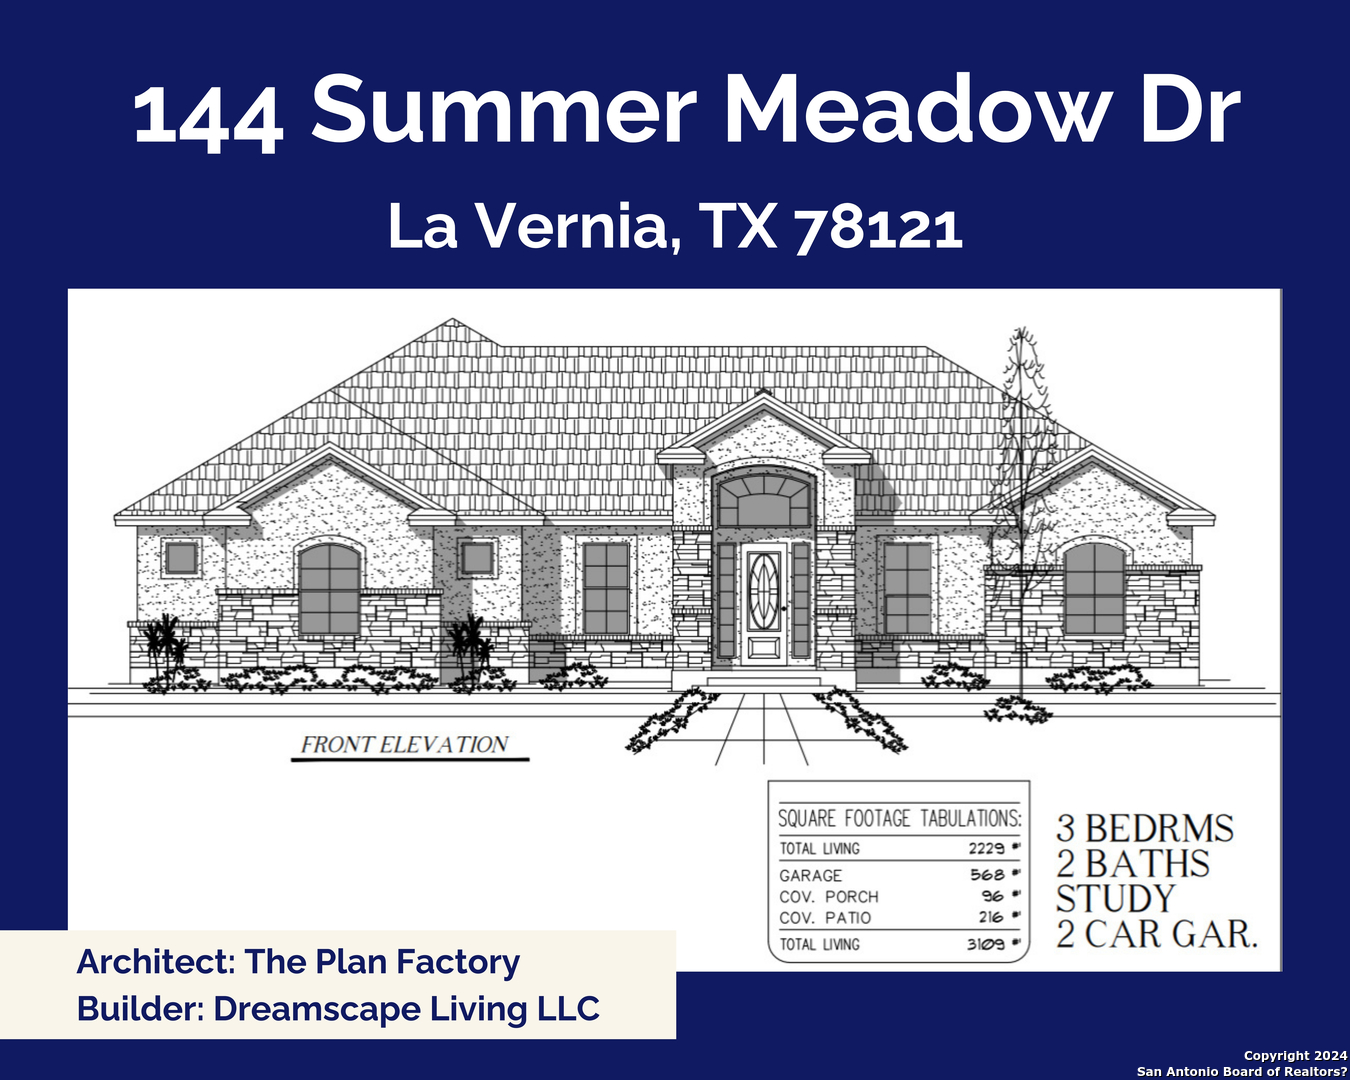 Photo of 144 Summer Meadow Dr in La Vernia, TX